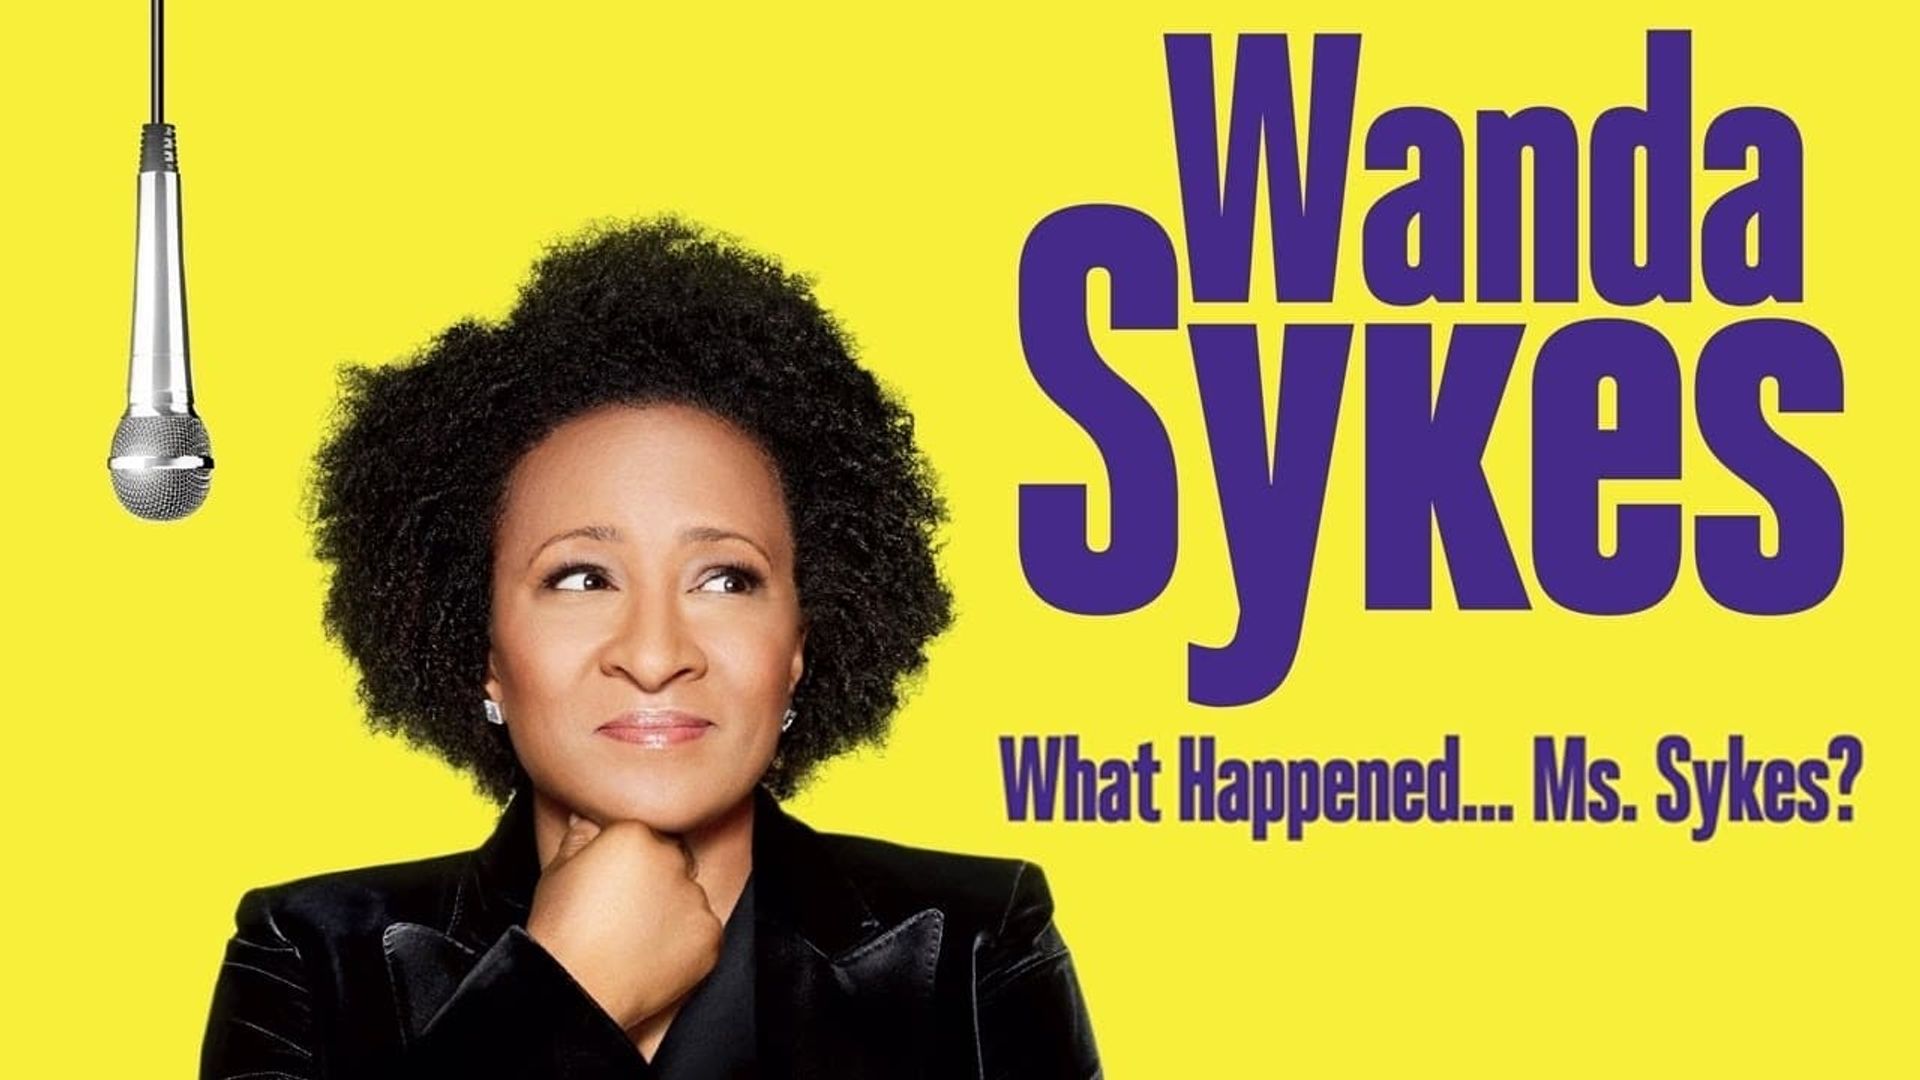 Wanda Sykes: What Happened... Ms. Sykes? background